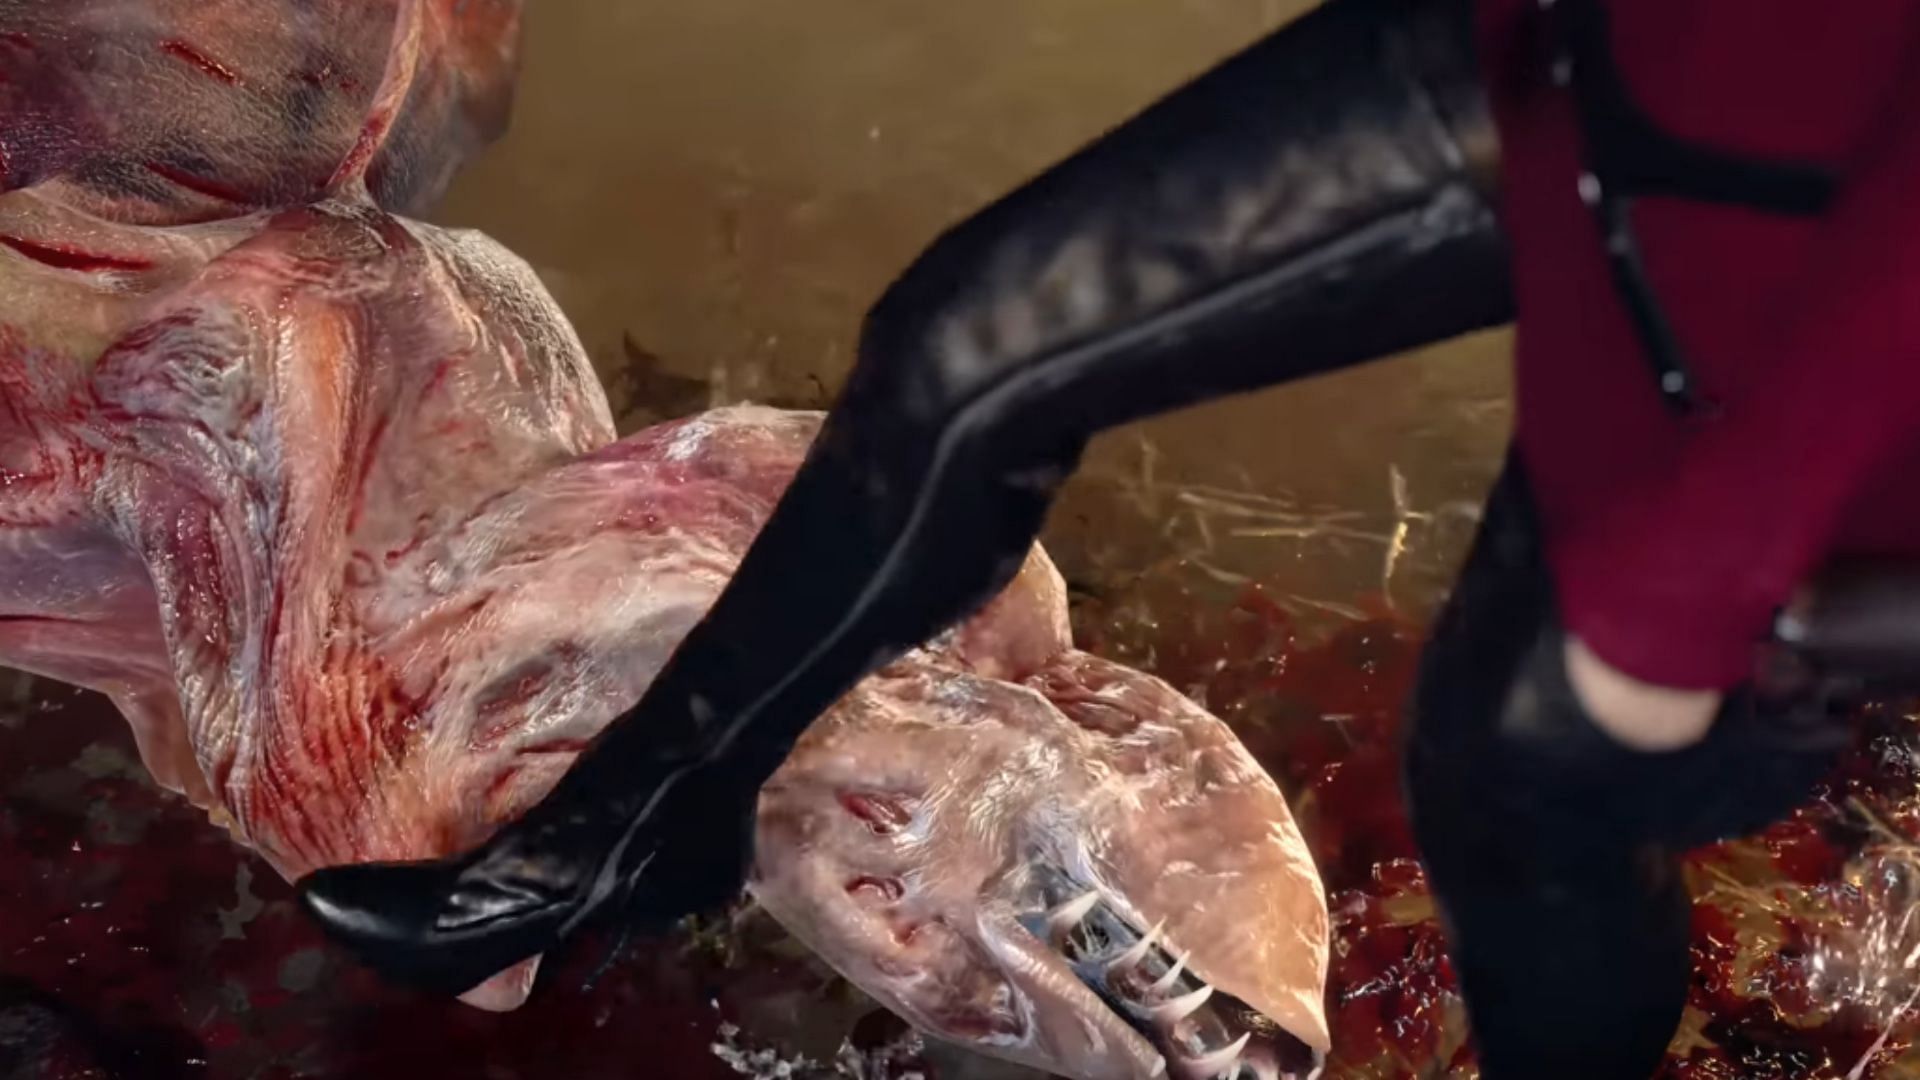 Ada kills El Gigante in Resident Evil 4 Separate Ways DLC (Image via Capcom)